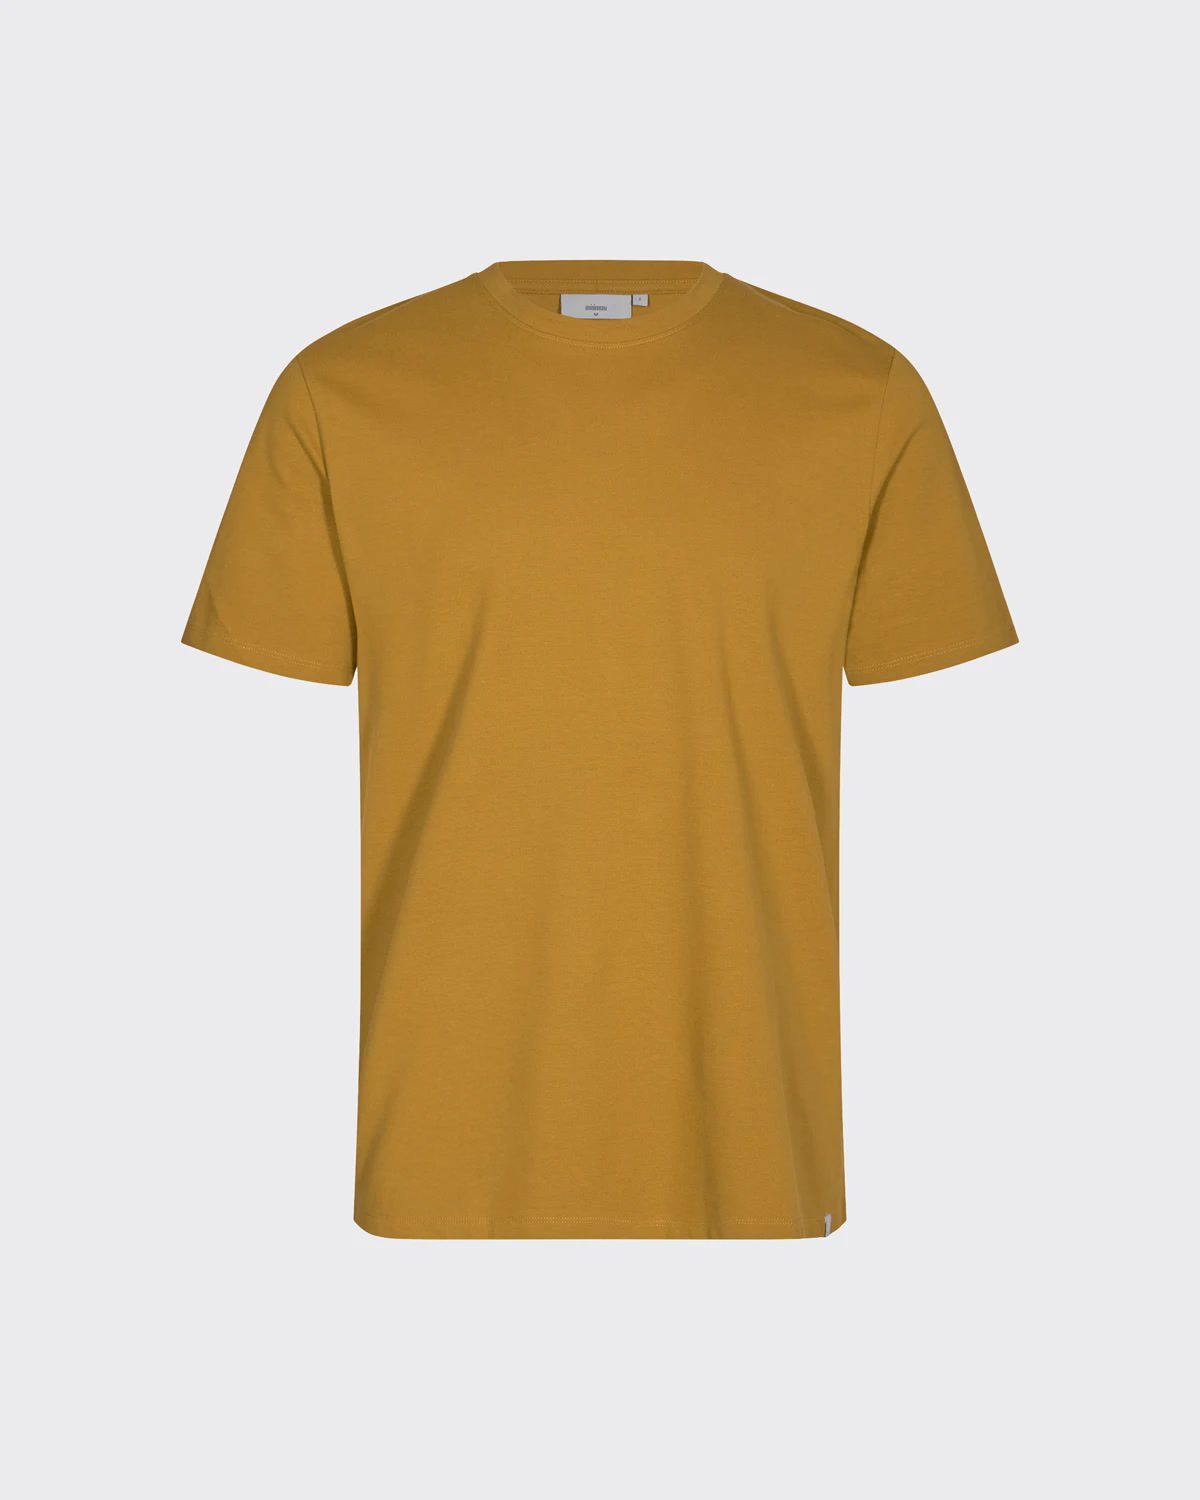 Sims 2088 Short Sleeved T-Shirt